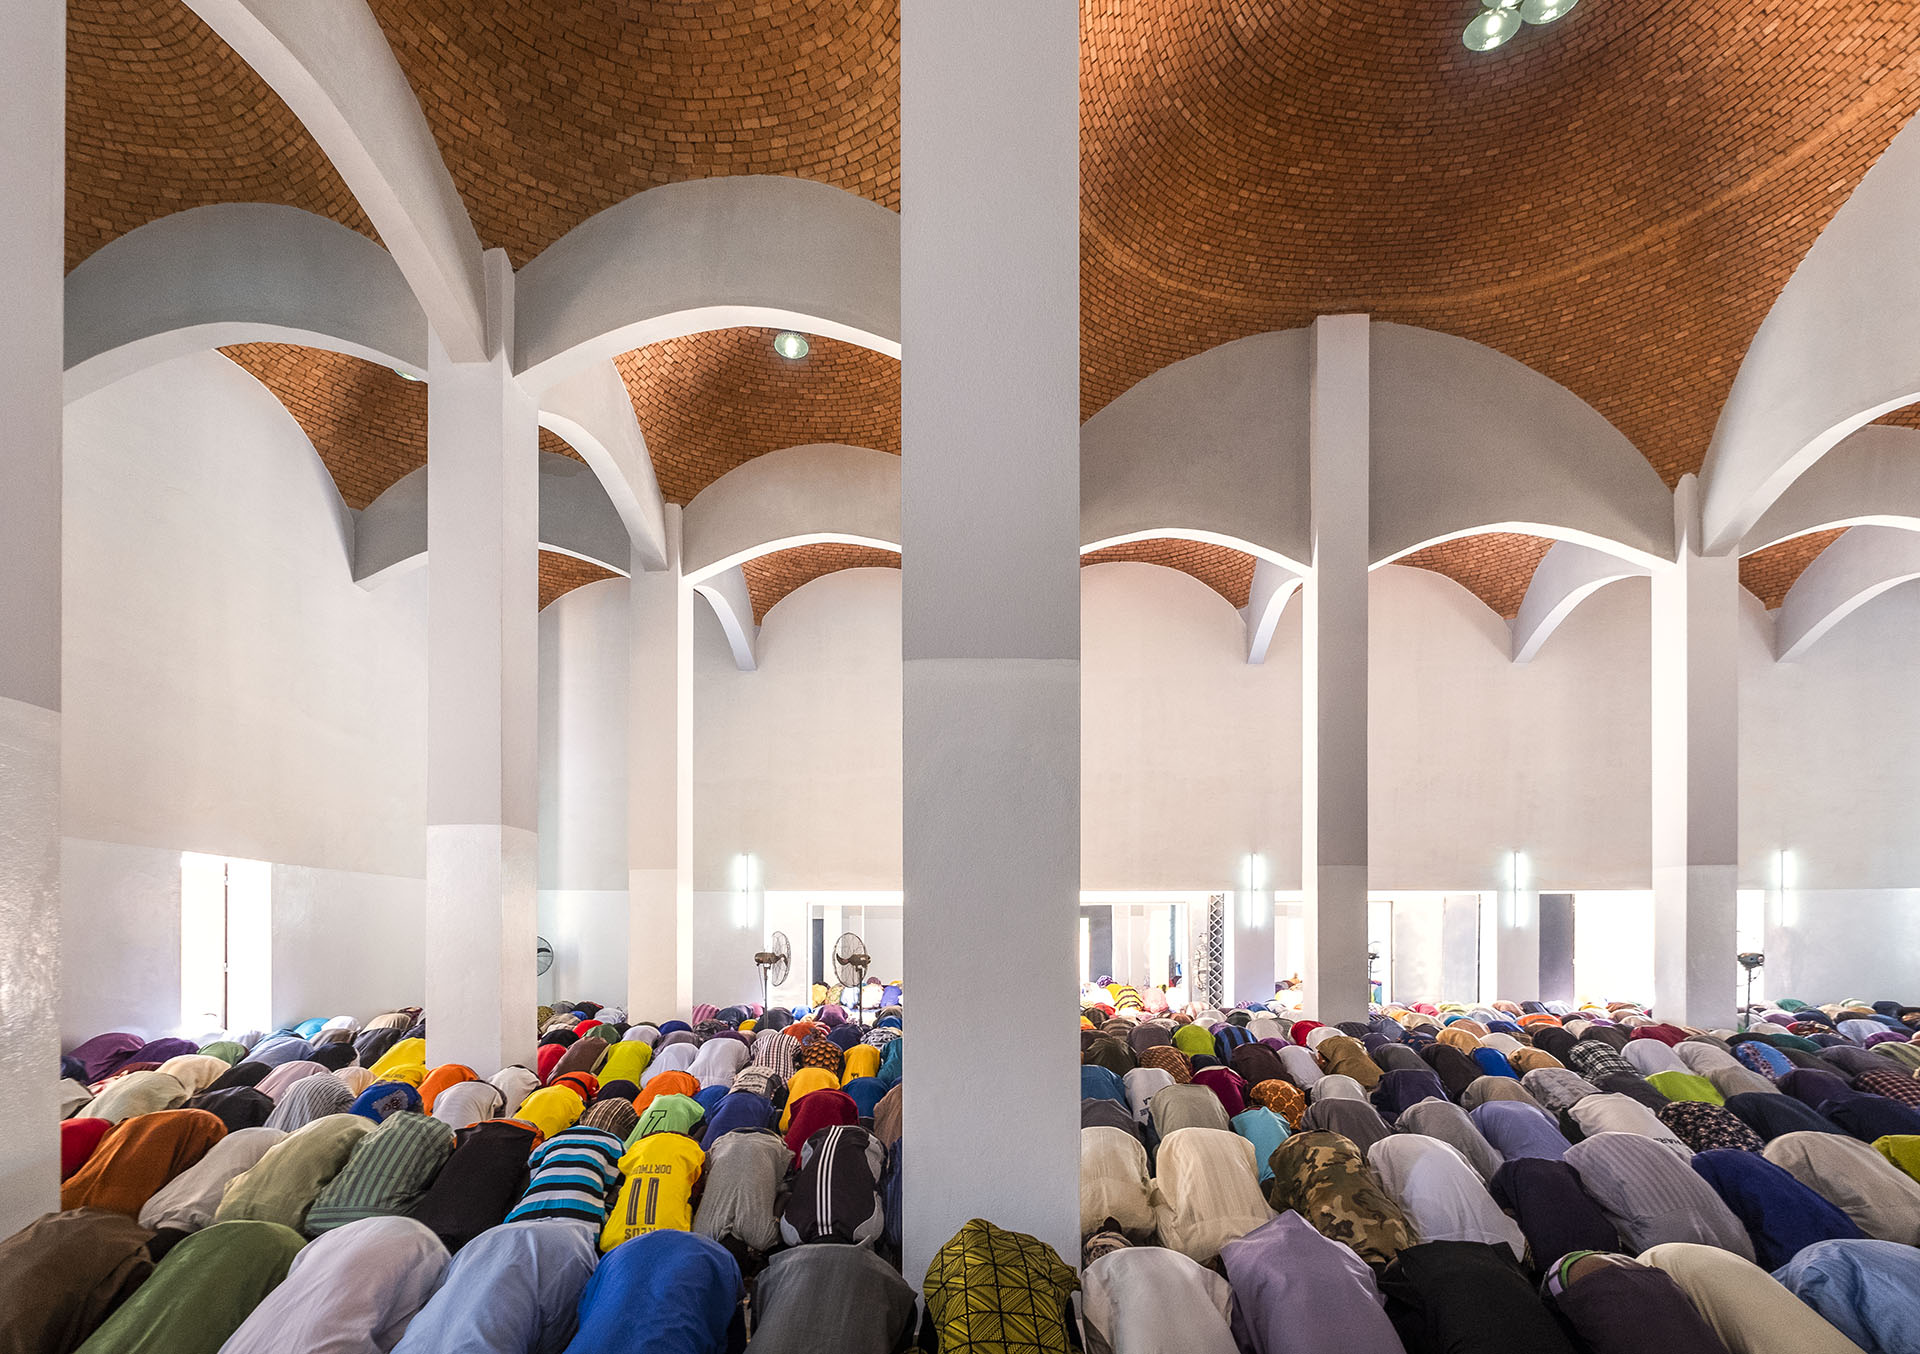 <p>Interior, praying at the mosque</p>